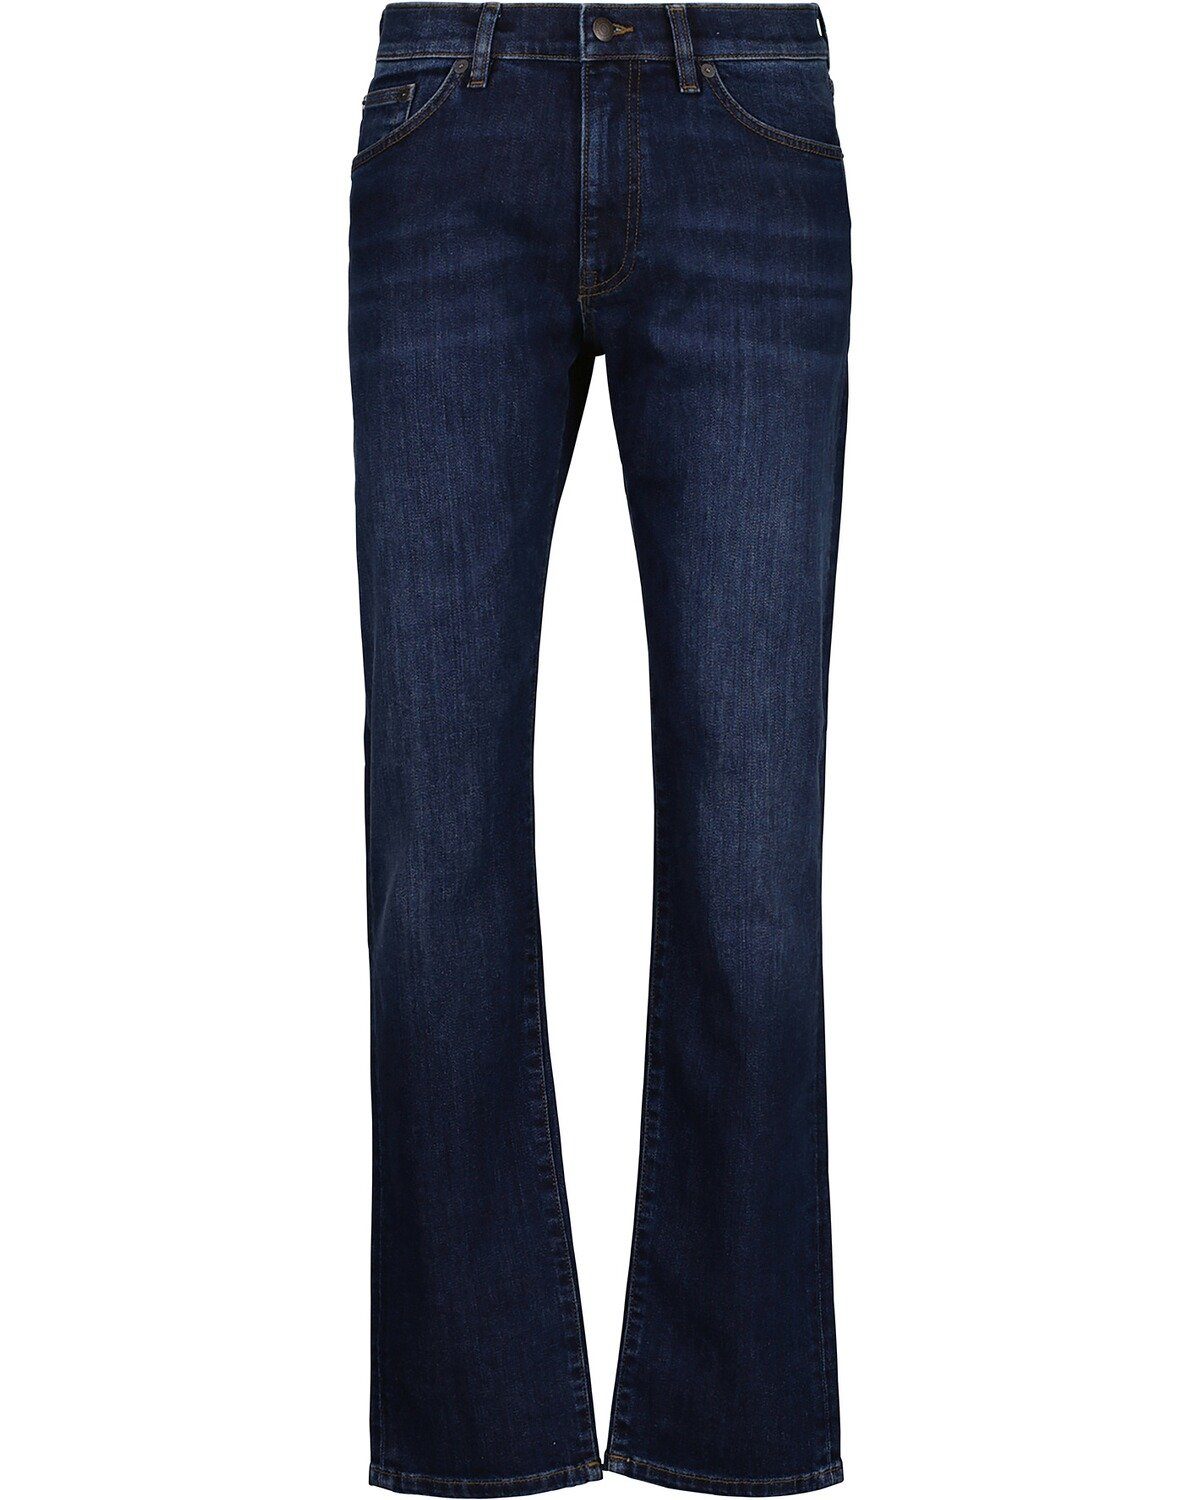 Worn Fit In Gant Slim Blue Dark 5-Pocket-Jeans Jeans